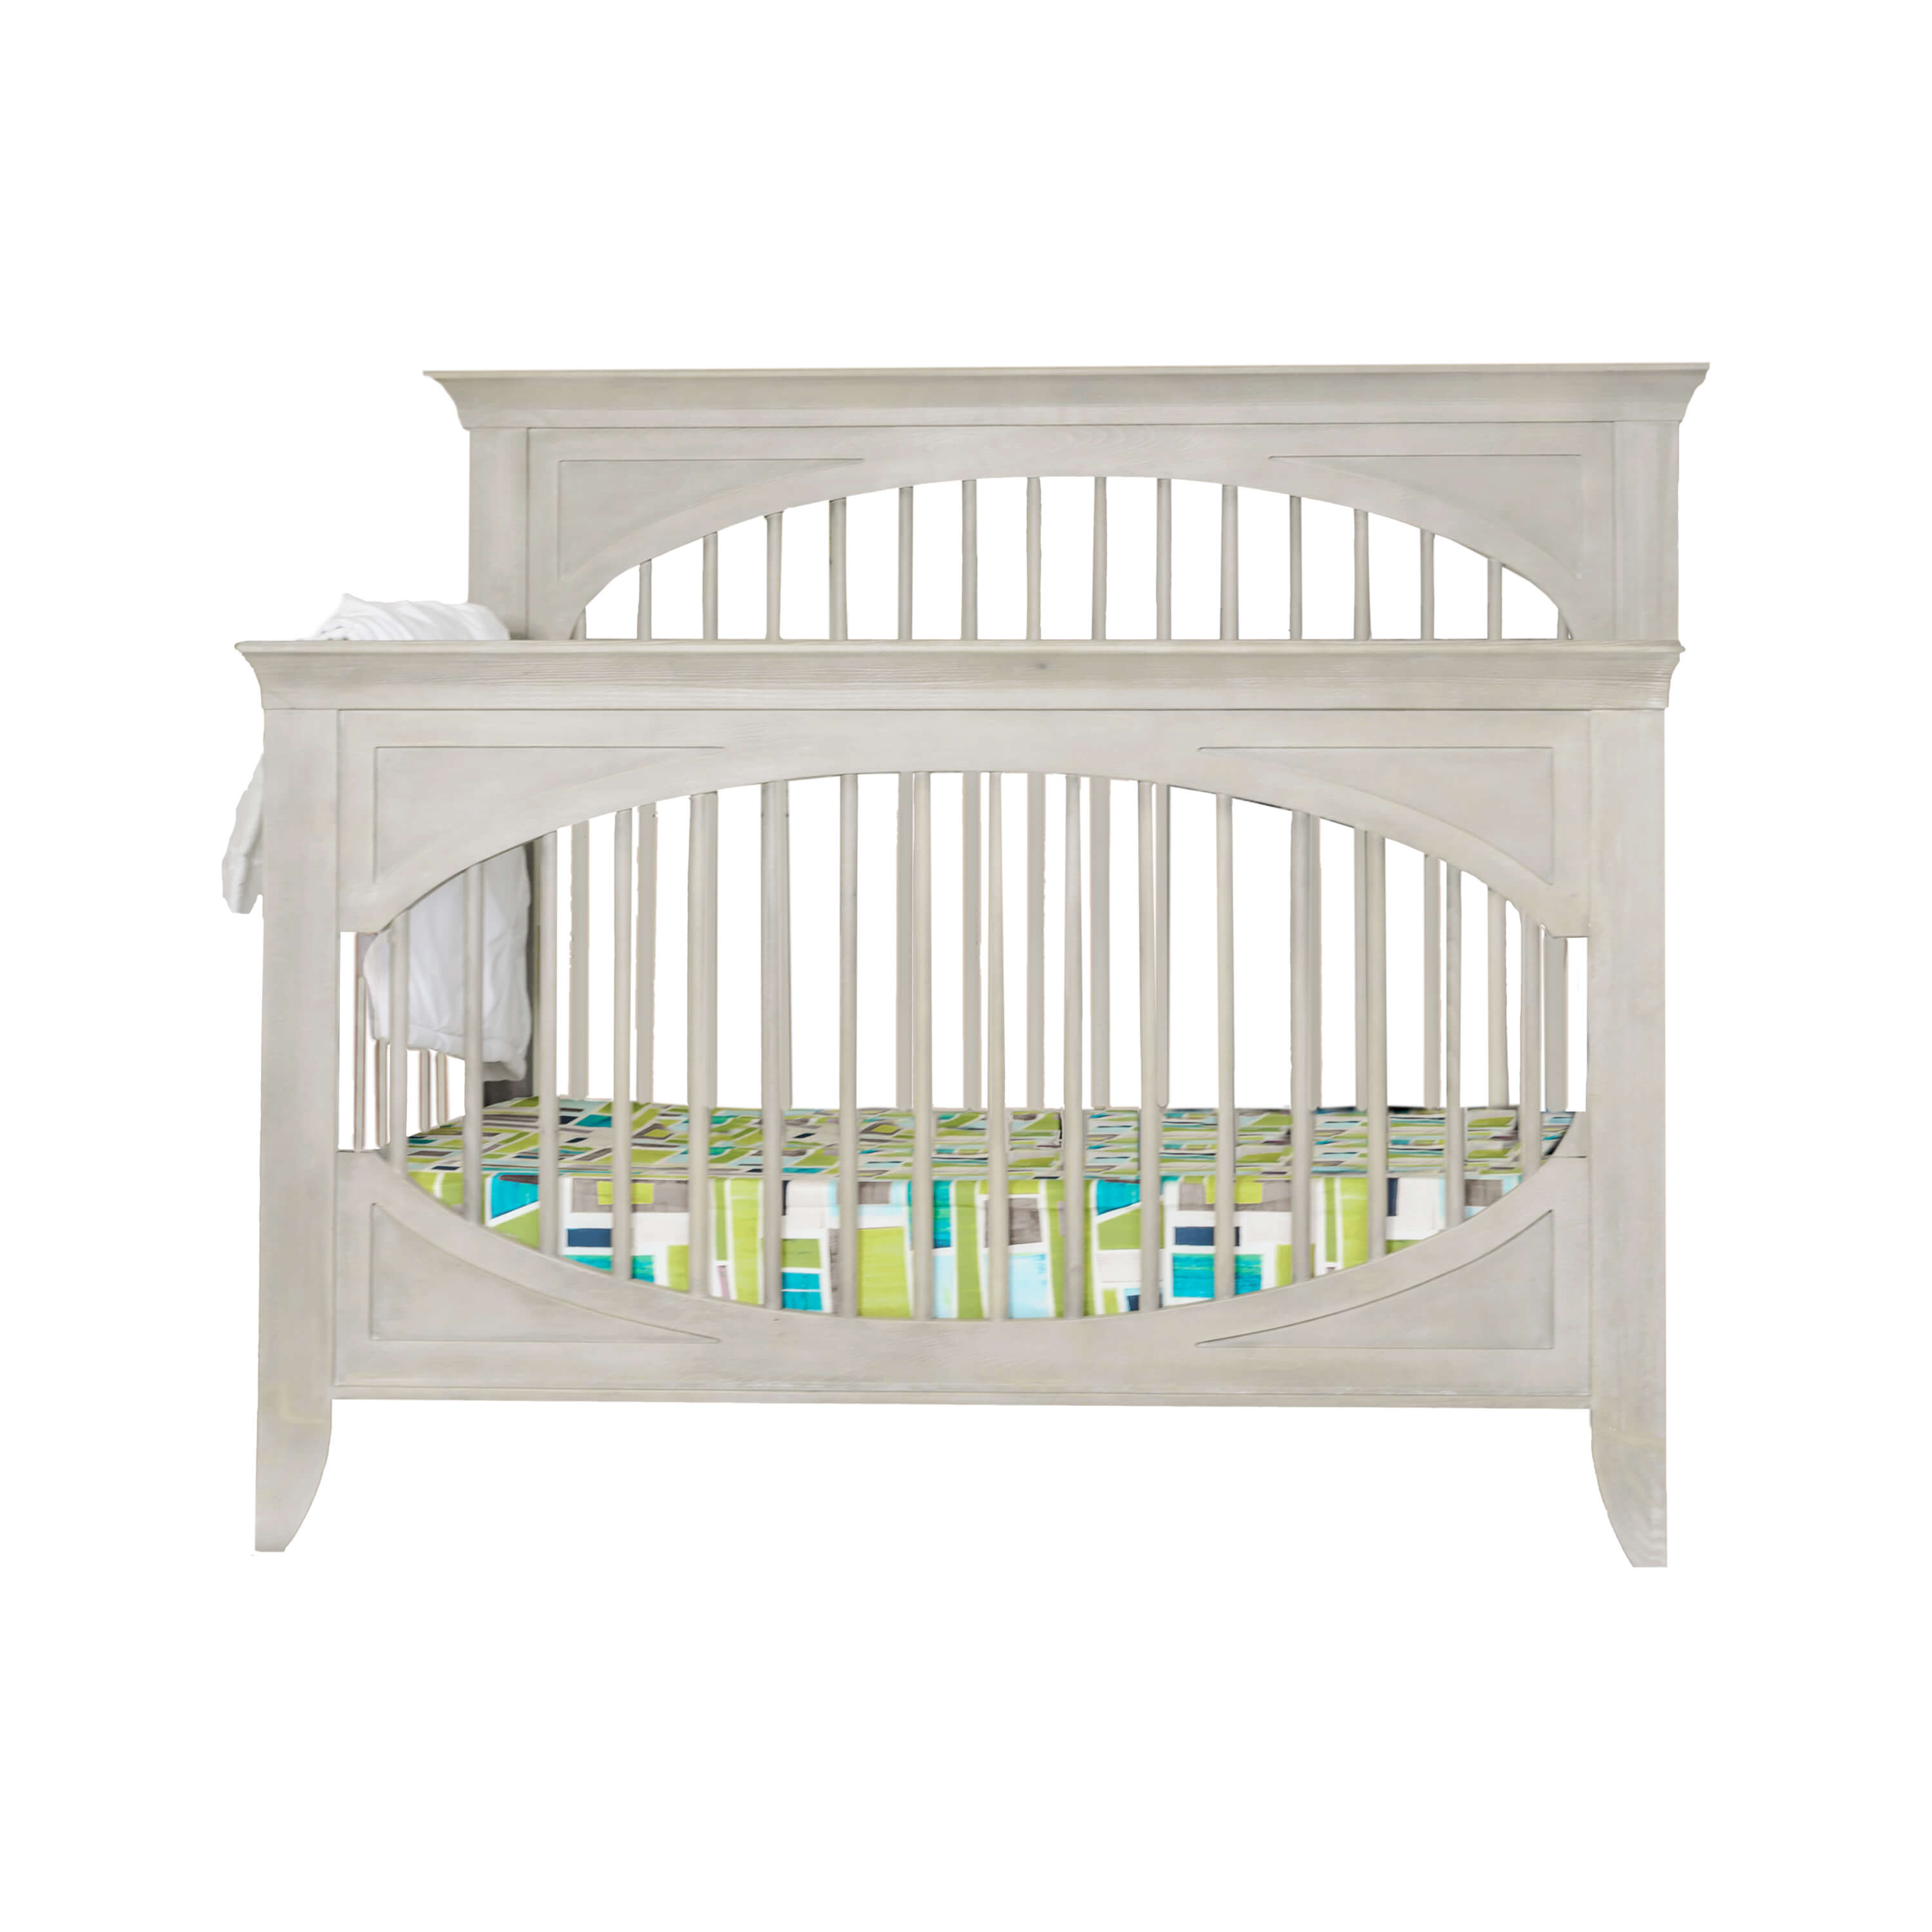 oval crib